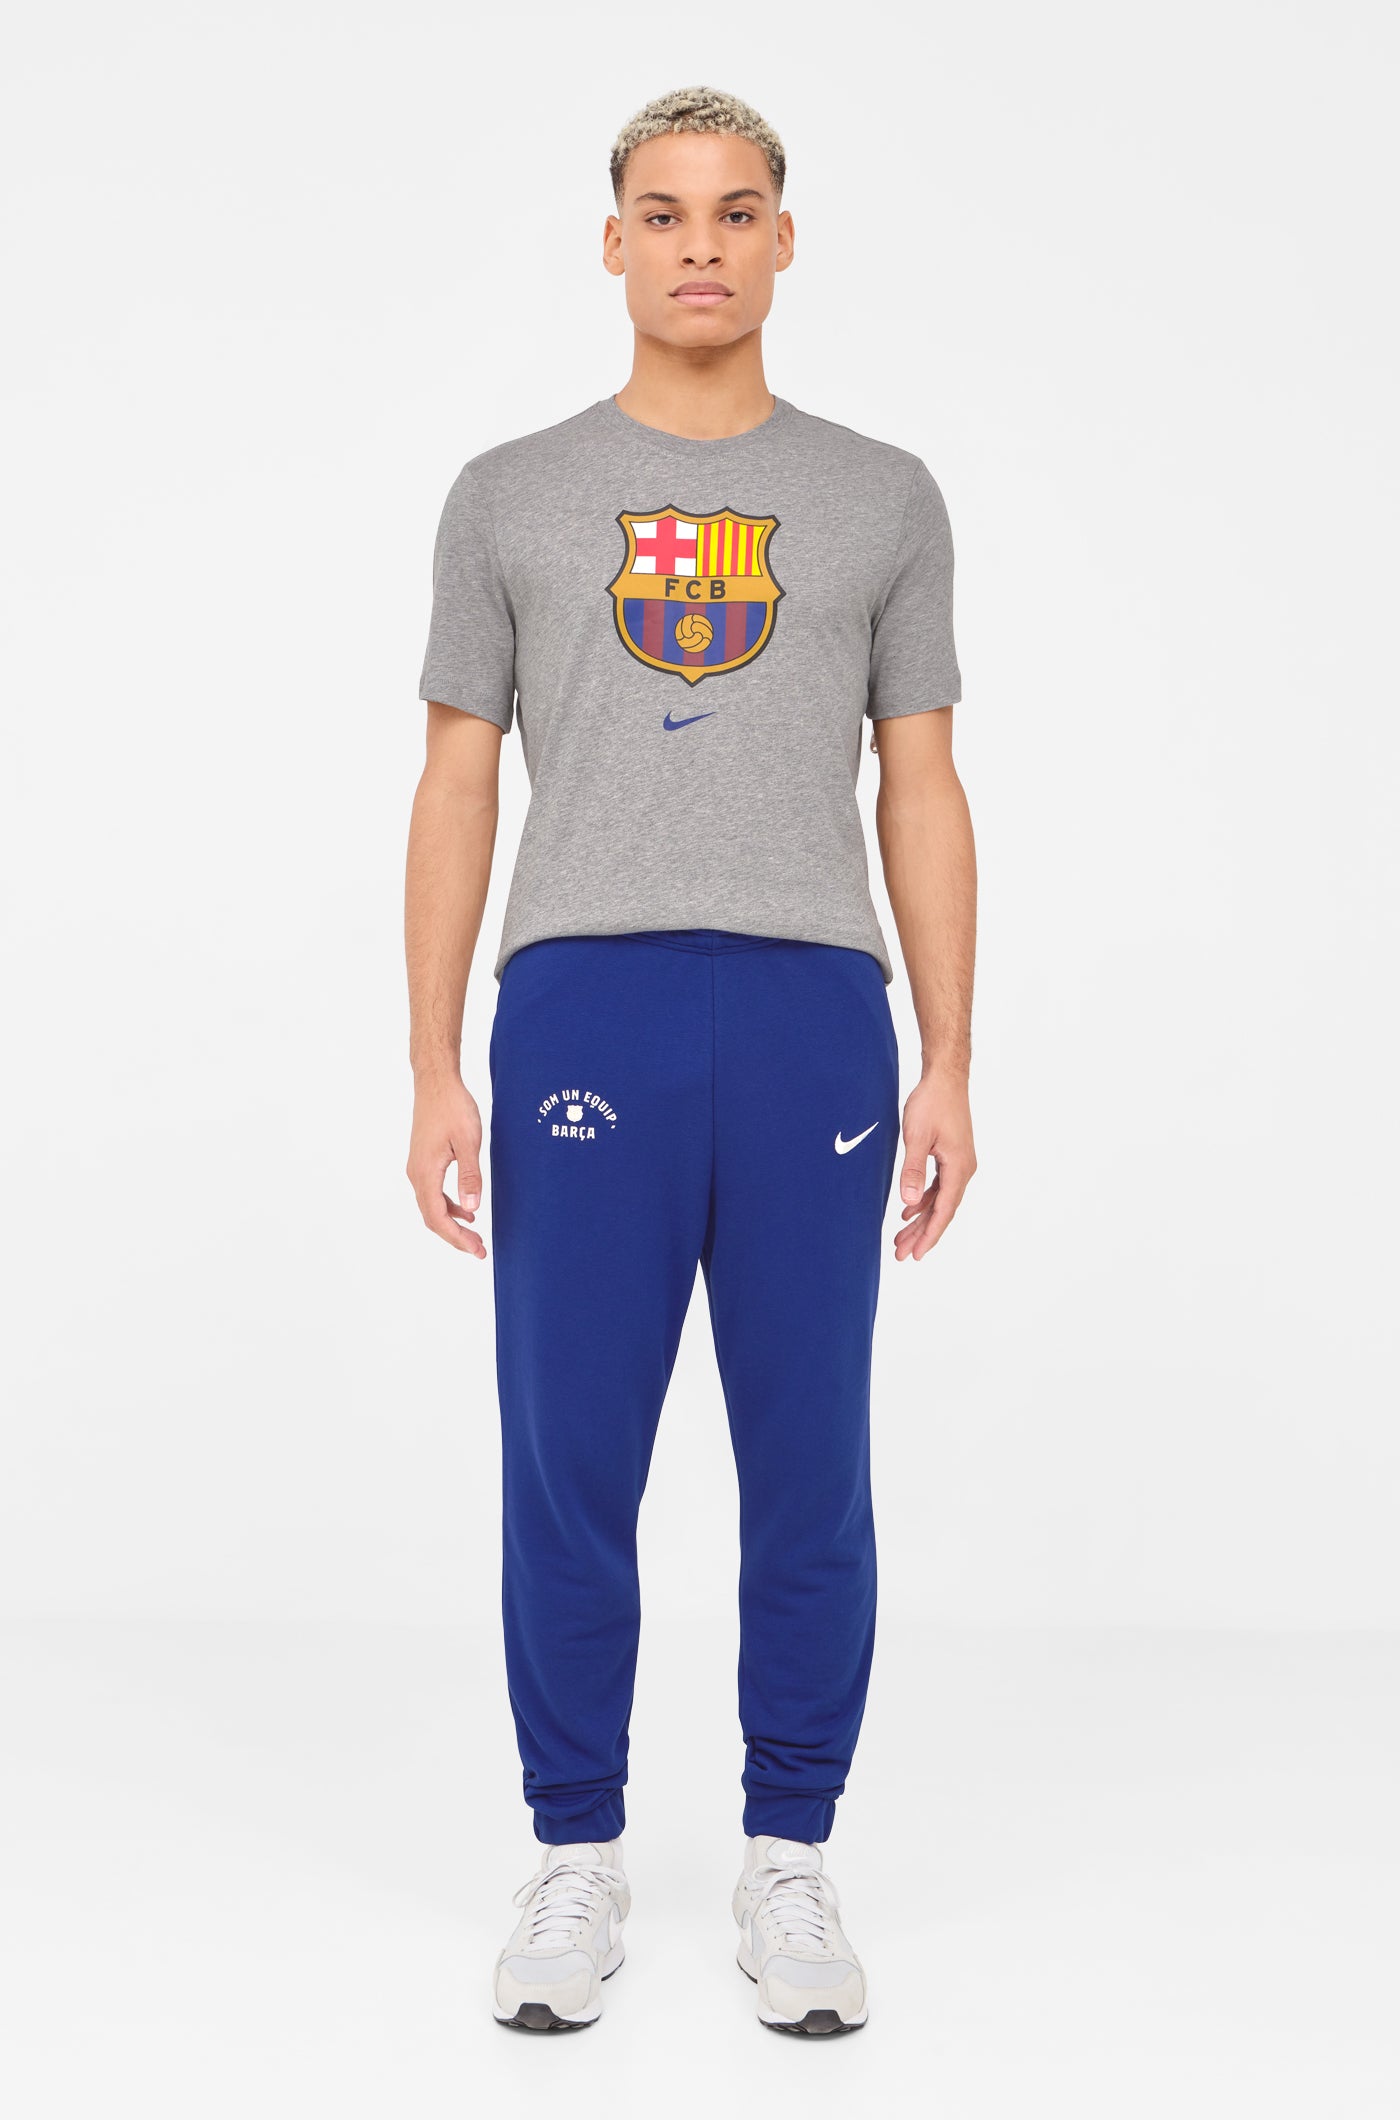 Pantalons som un equip Barça Nike